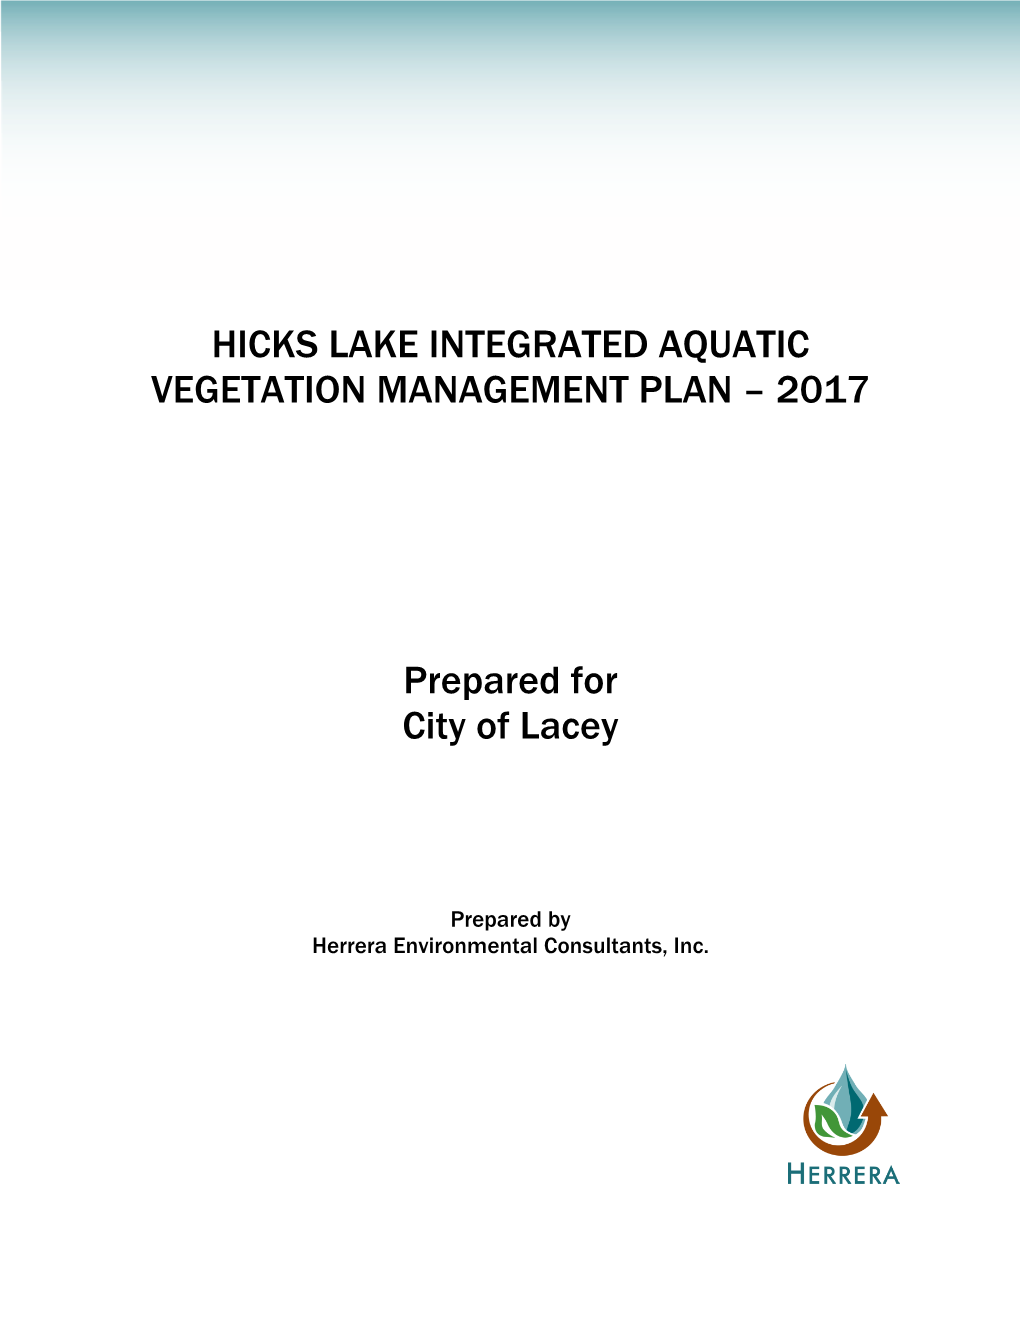 Hicks Lake Integrated Aquatic Vegetation Management Plan – 2017